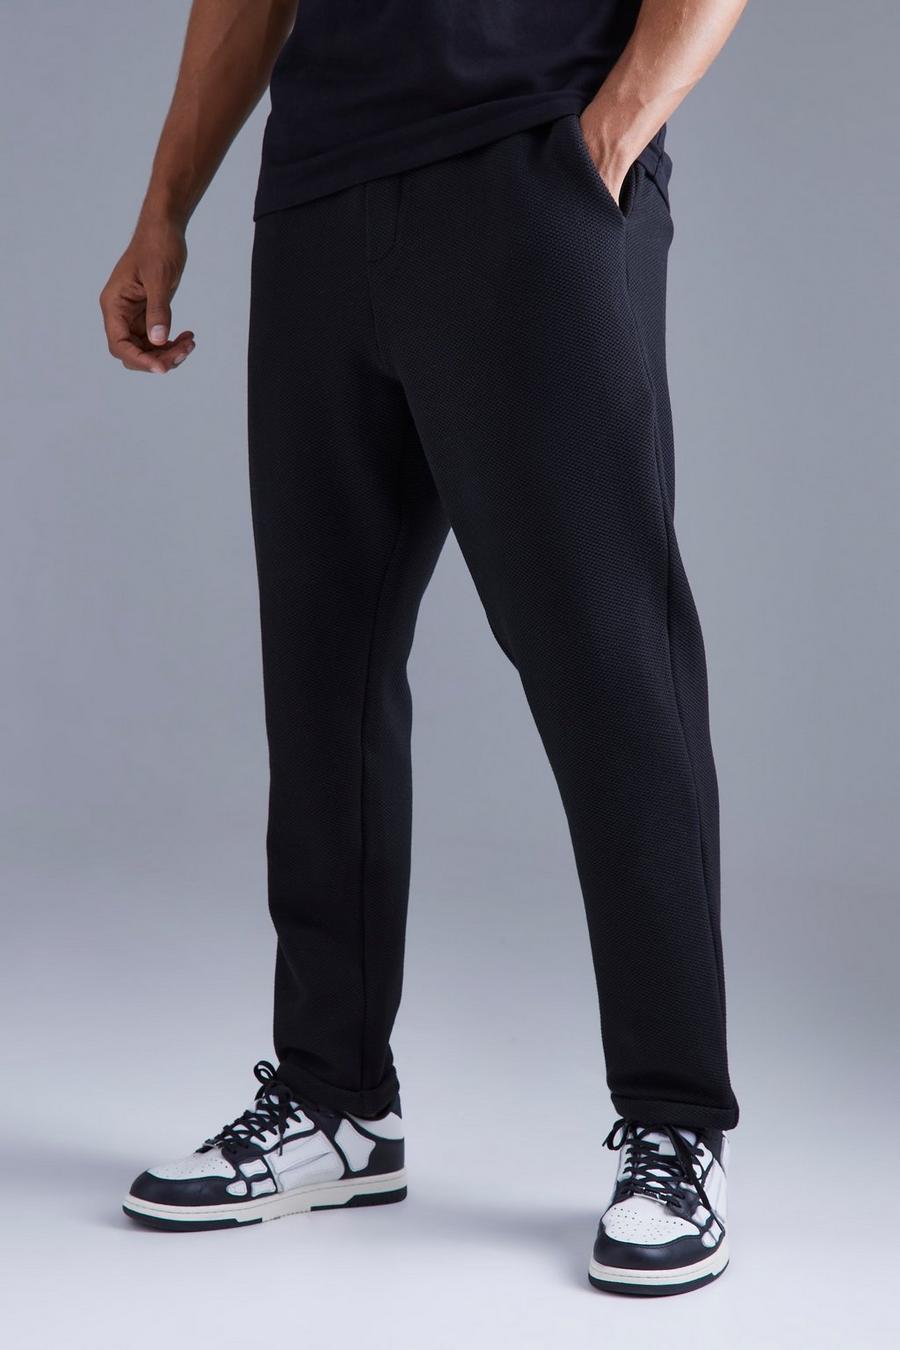 Black Elasticated Tapered Textured Smart Pants